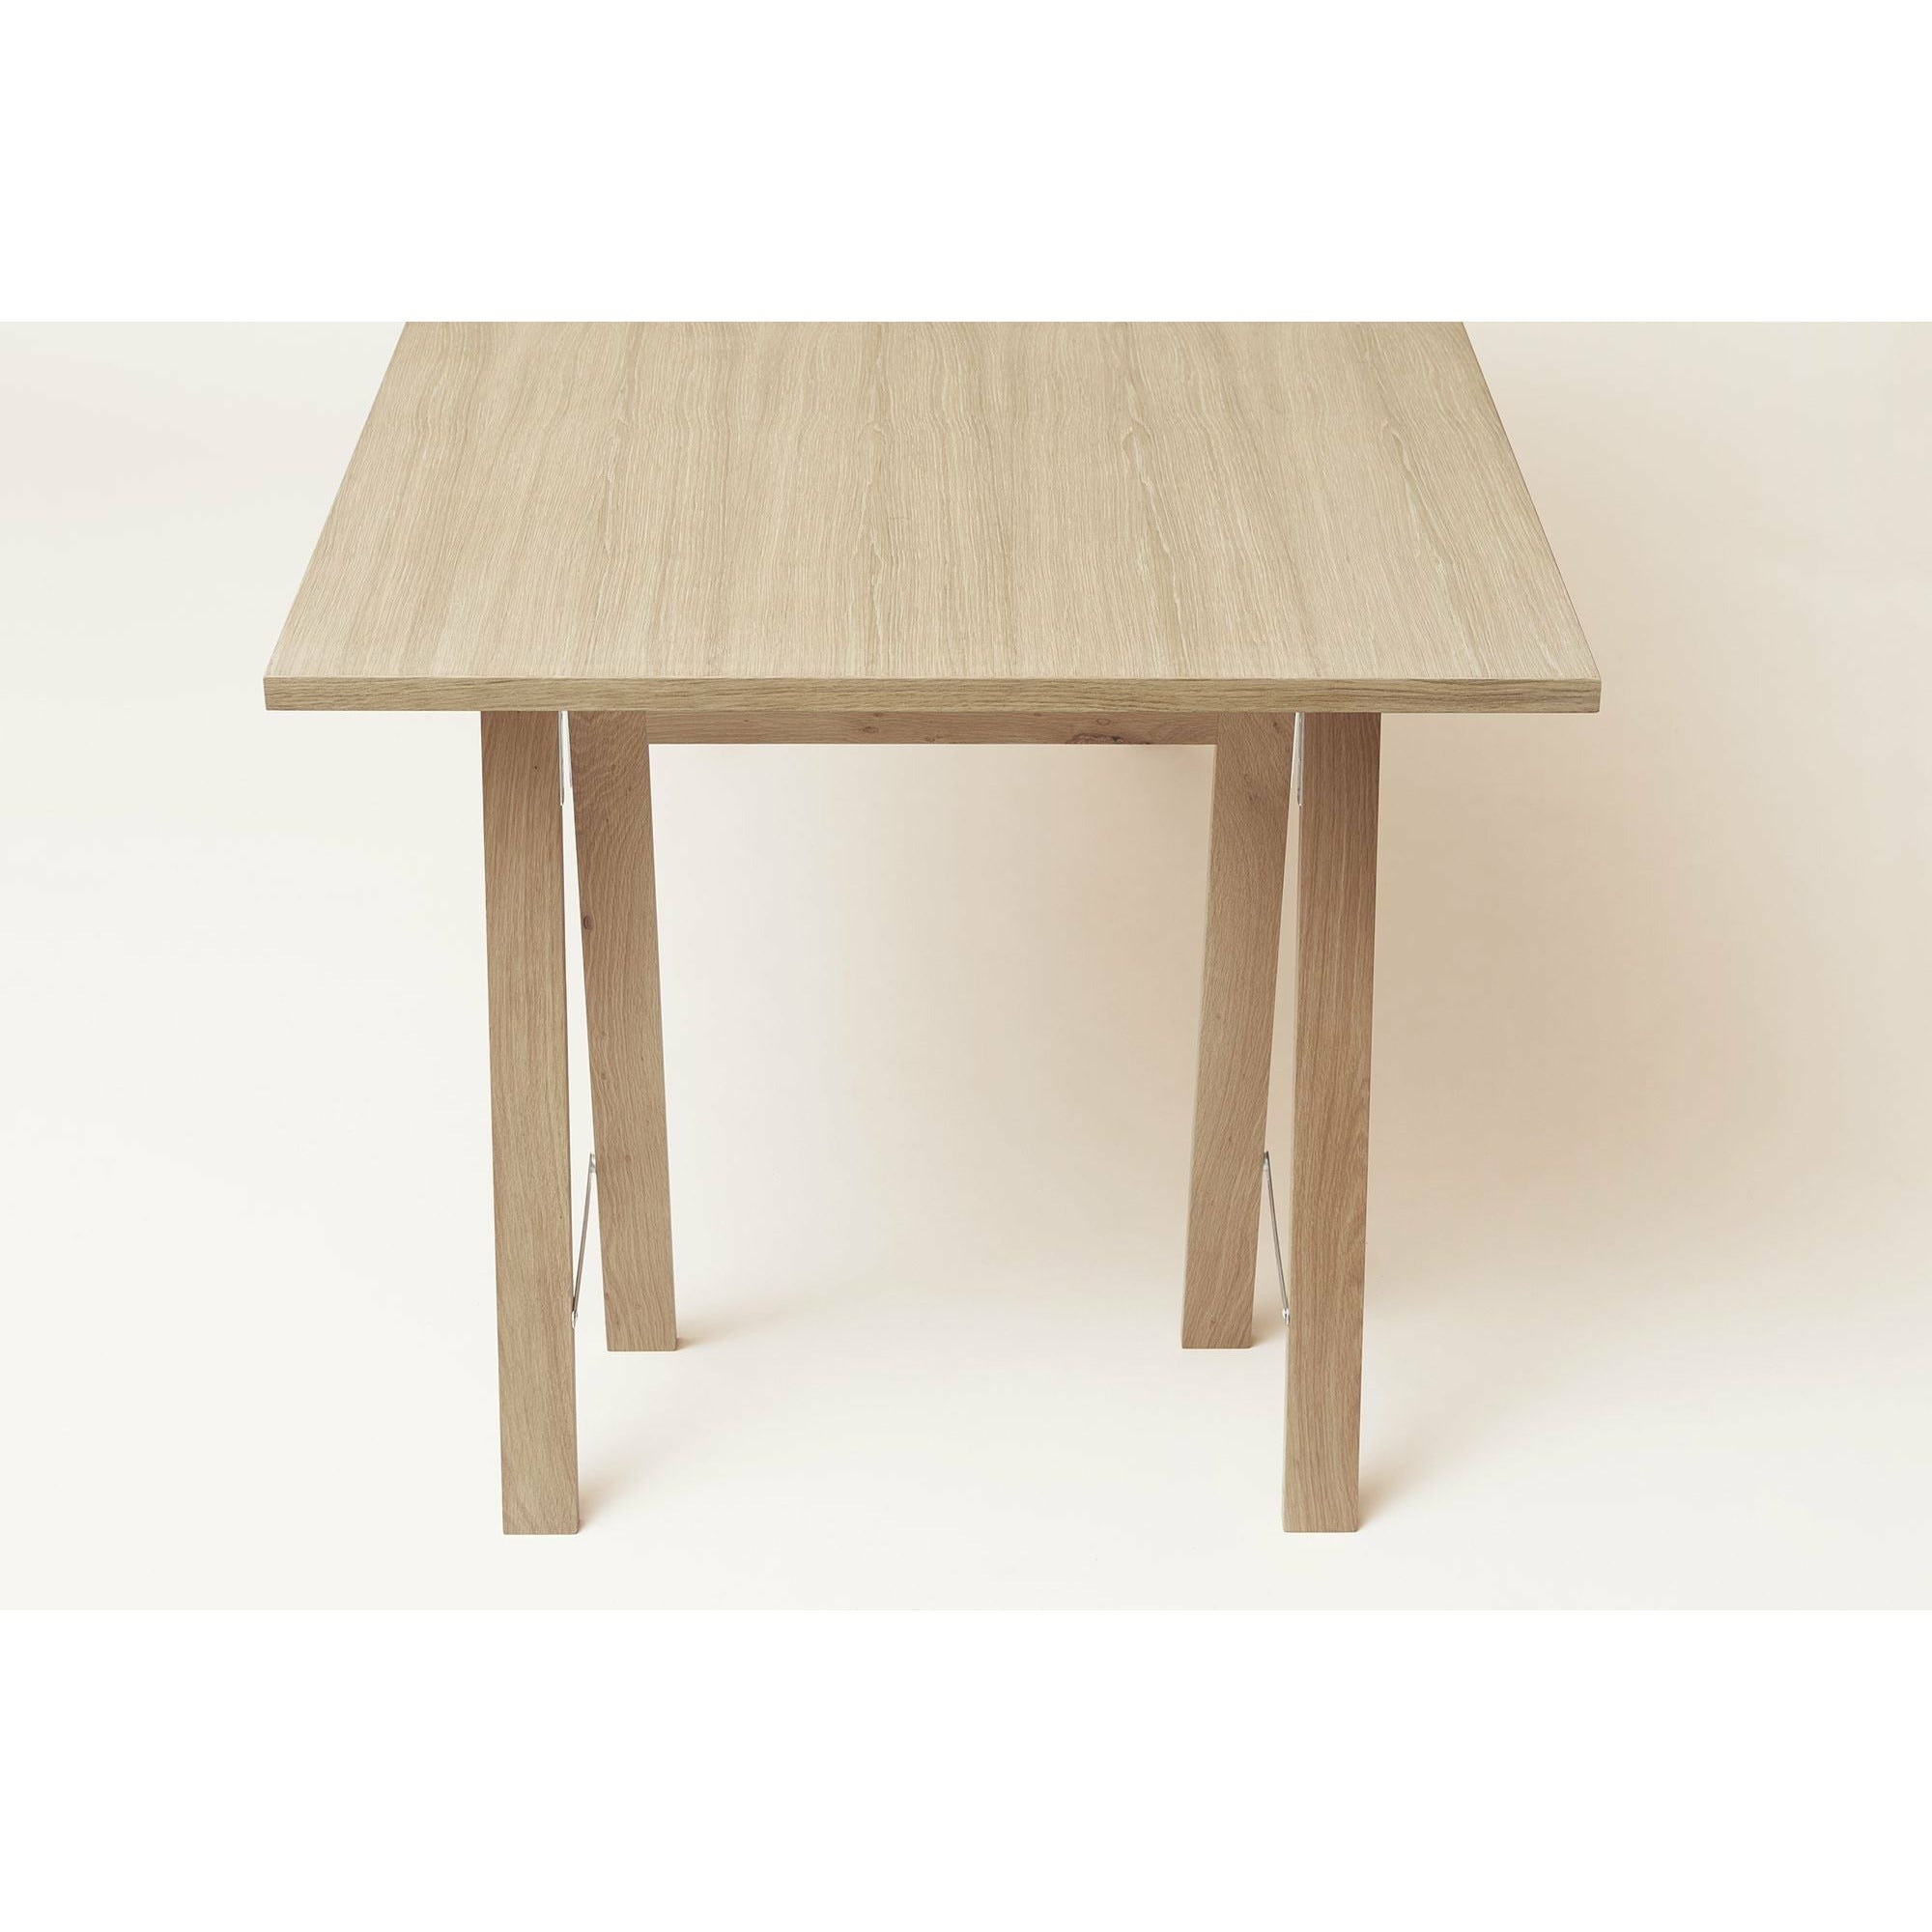 Form & Refine Linear Tabletop 125x68 Cm. White Oiled Oak